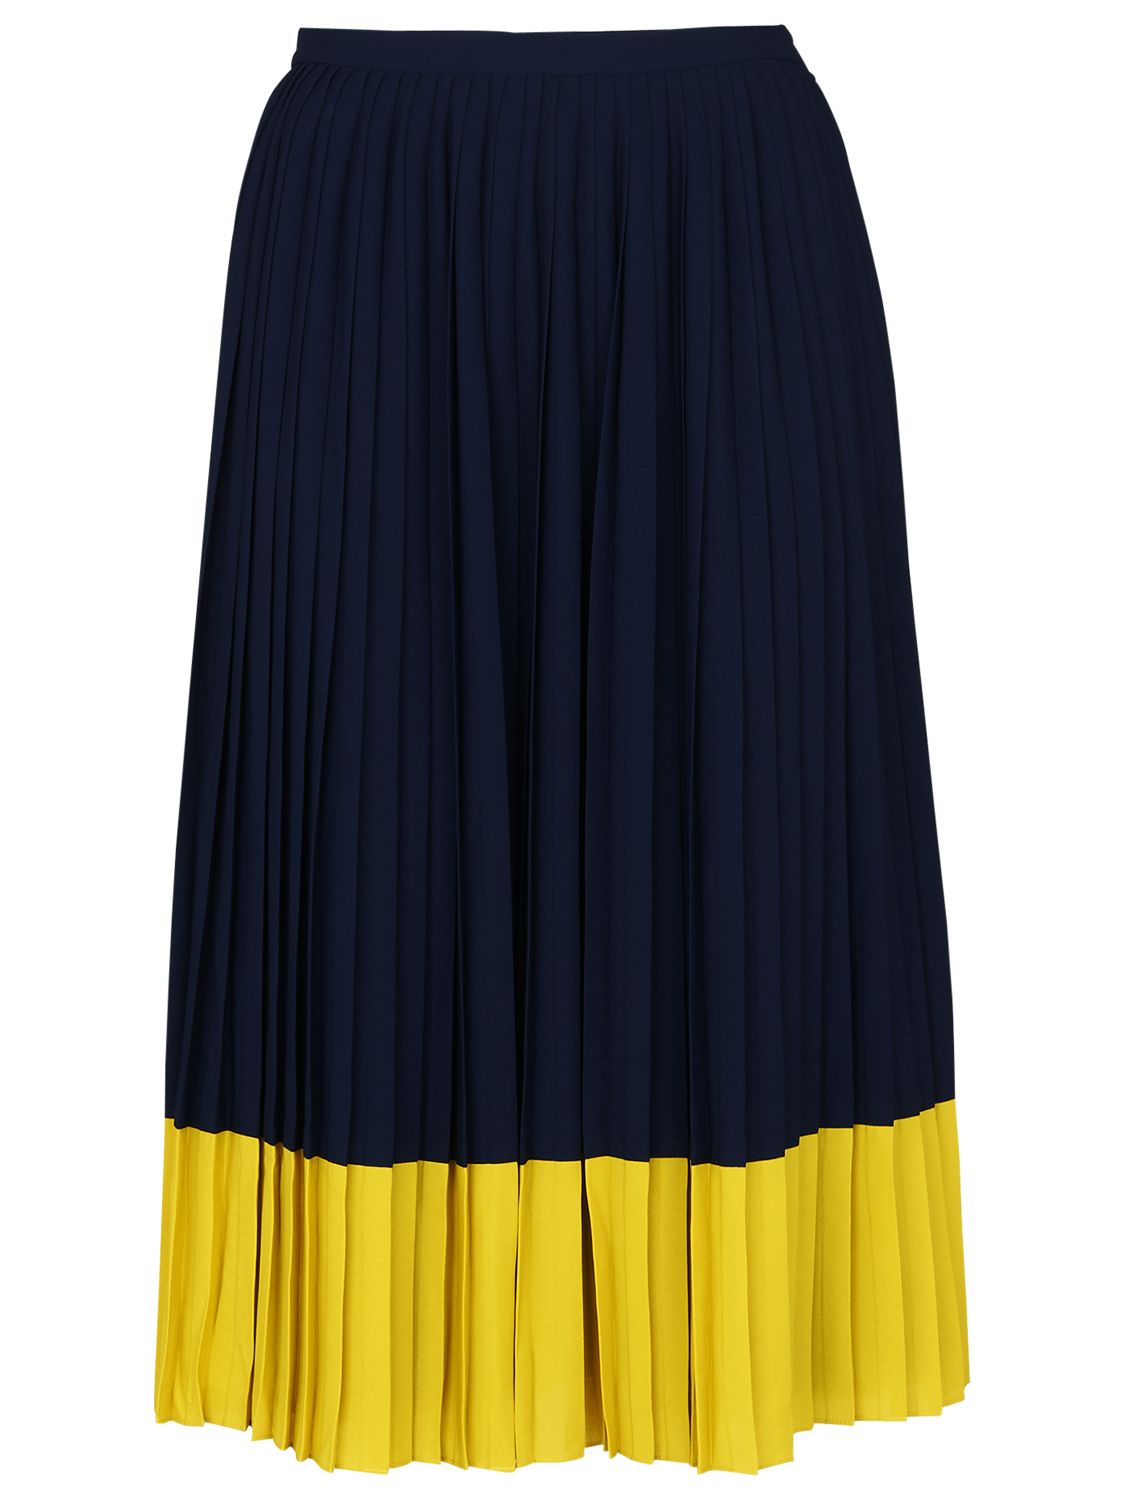 Whistles Colour Block Pleat Skirt, Navy/Yellow